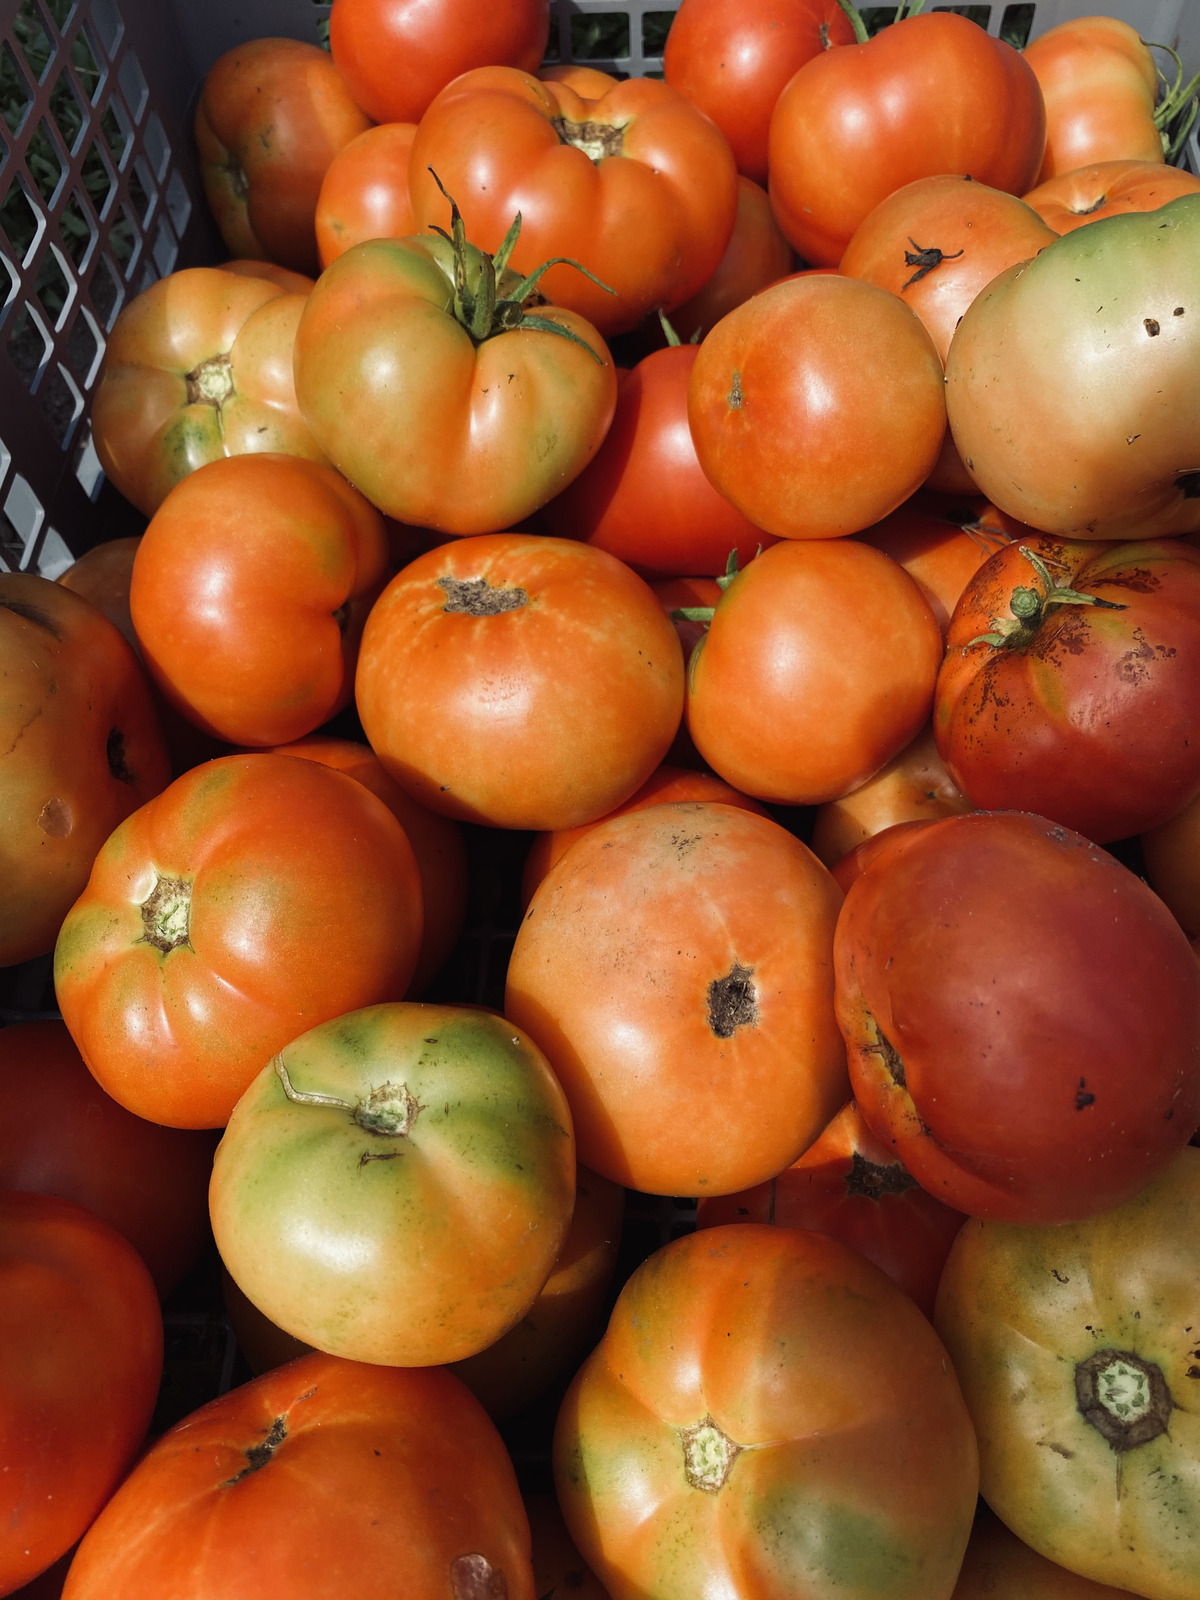 Tomatoes grown at Big Hill Farm.